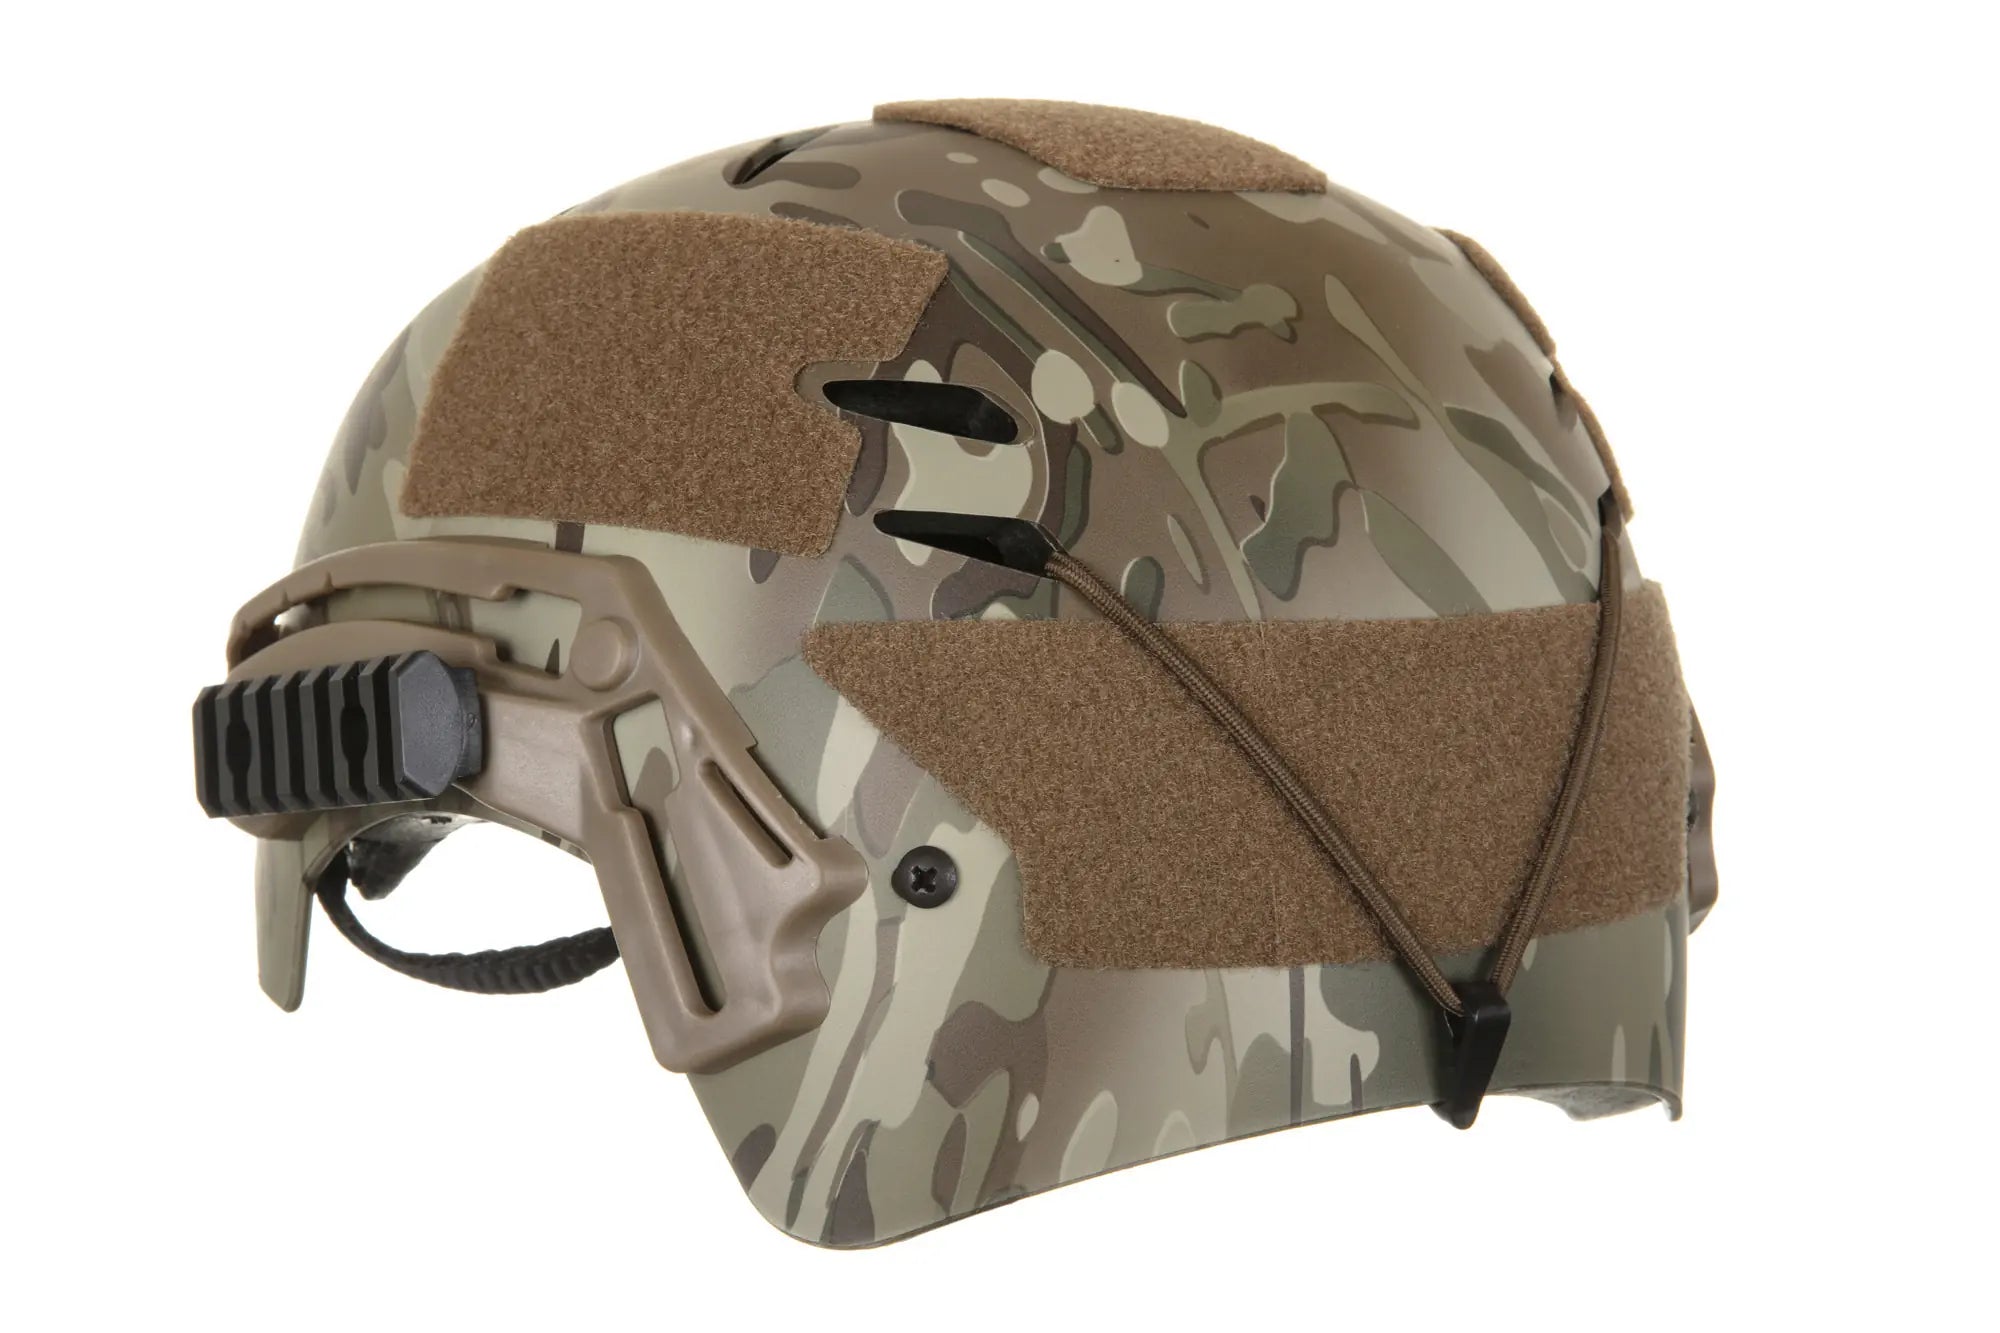 Replica of Emerson Gear EXF Bump Protective Multicam helmet